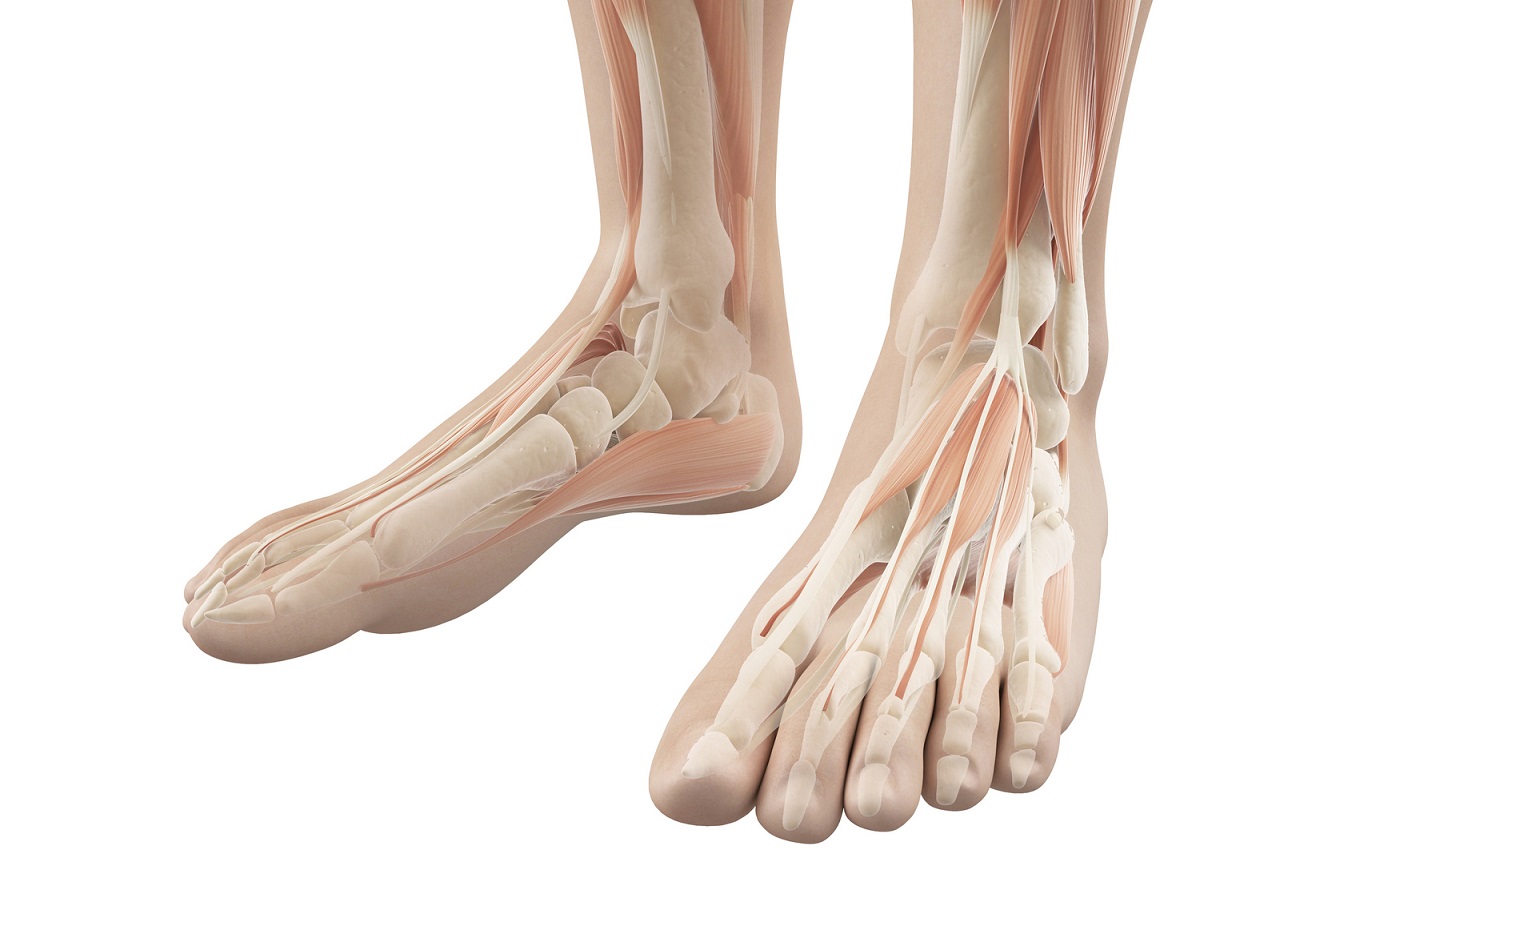 足 の 骨 構造